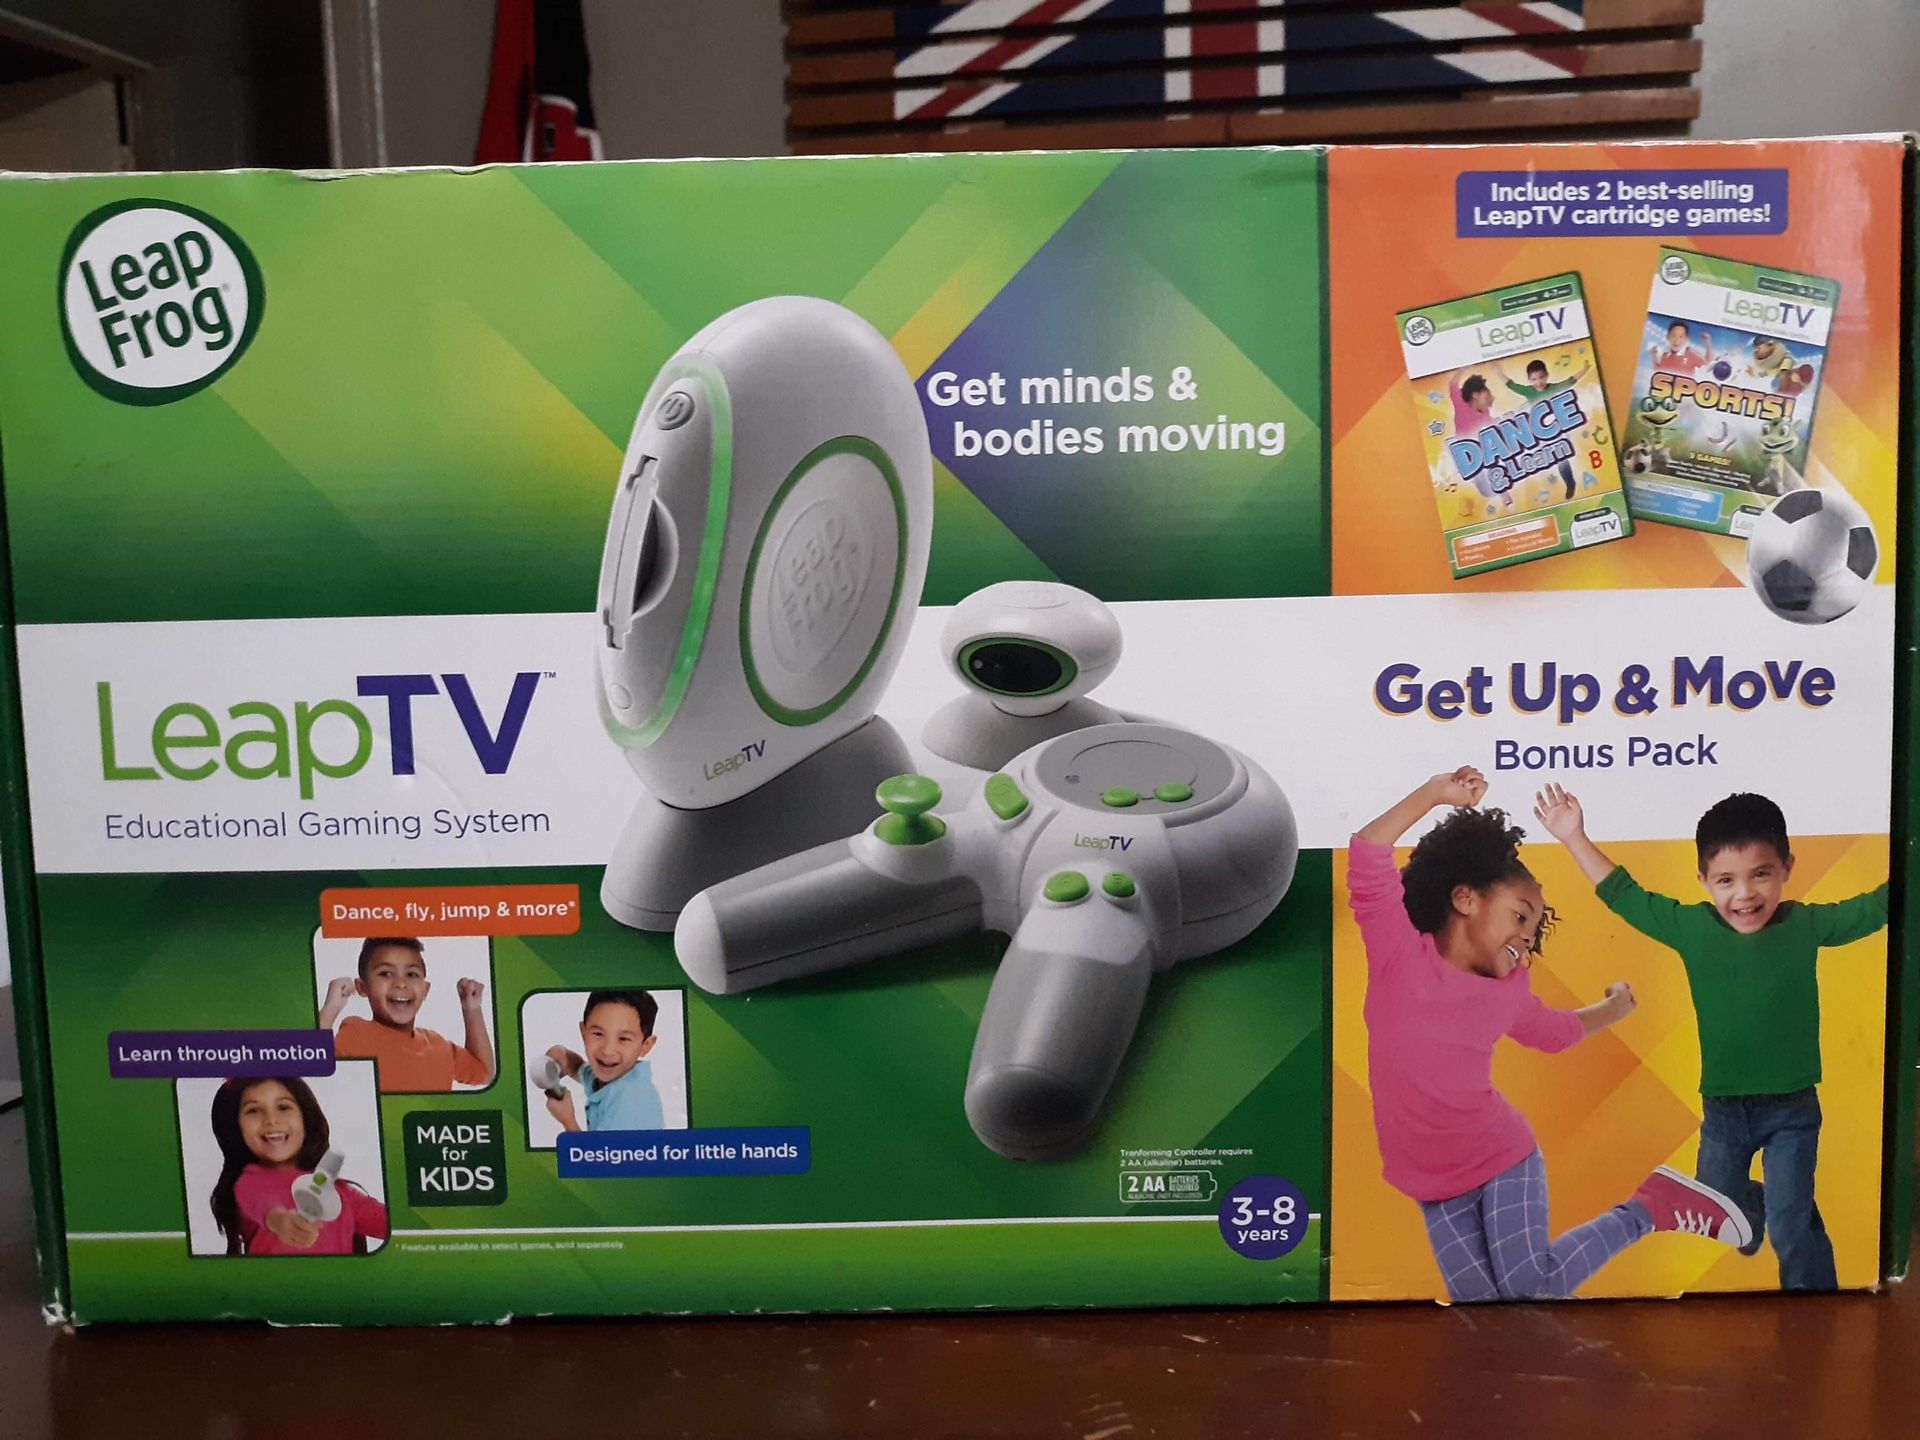 Brand new Rare LeapFrog LeapTV Educational Gaming System including 2 Best-selling Leap-TV Games